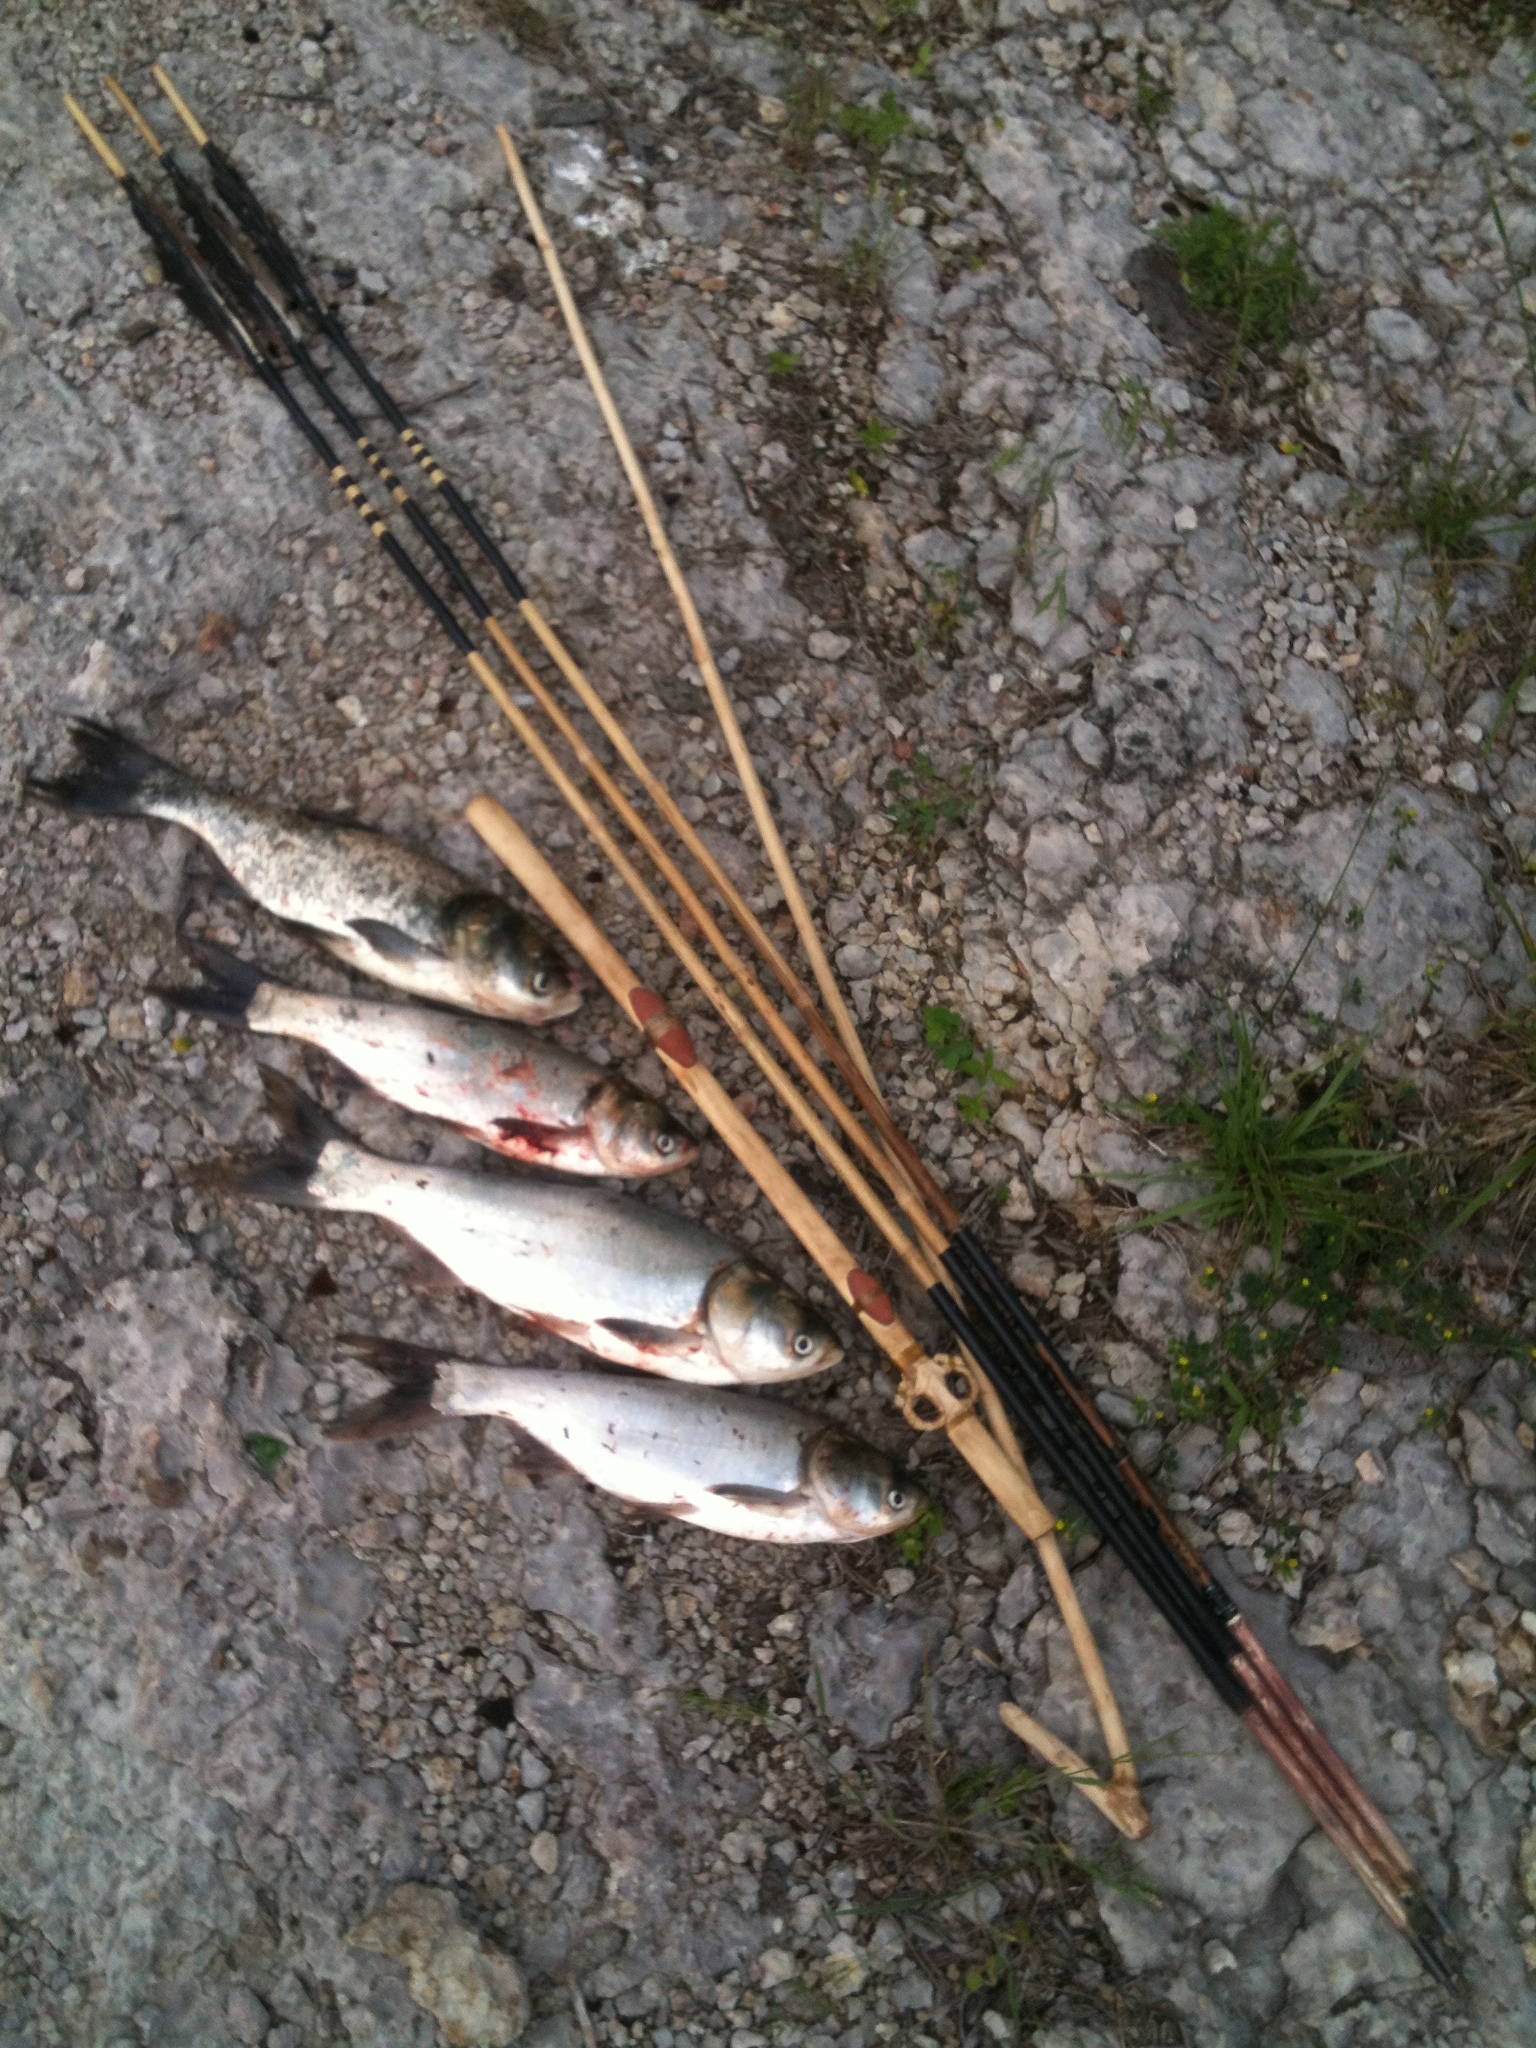 Fishing with Traditional Atlatl equipment